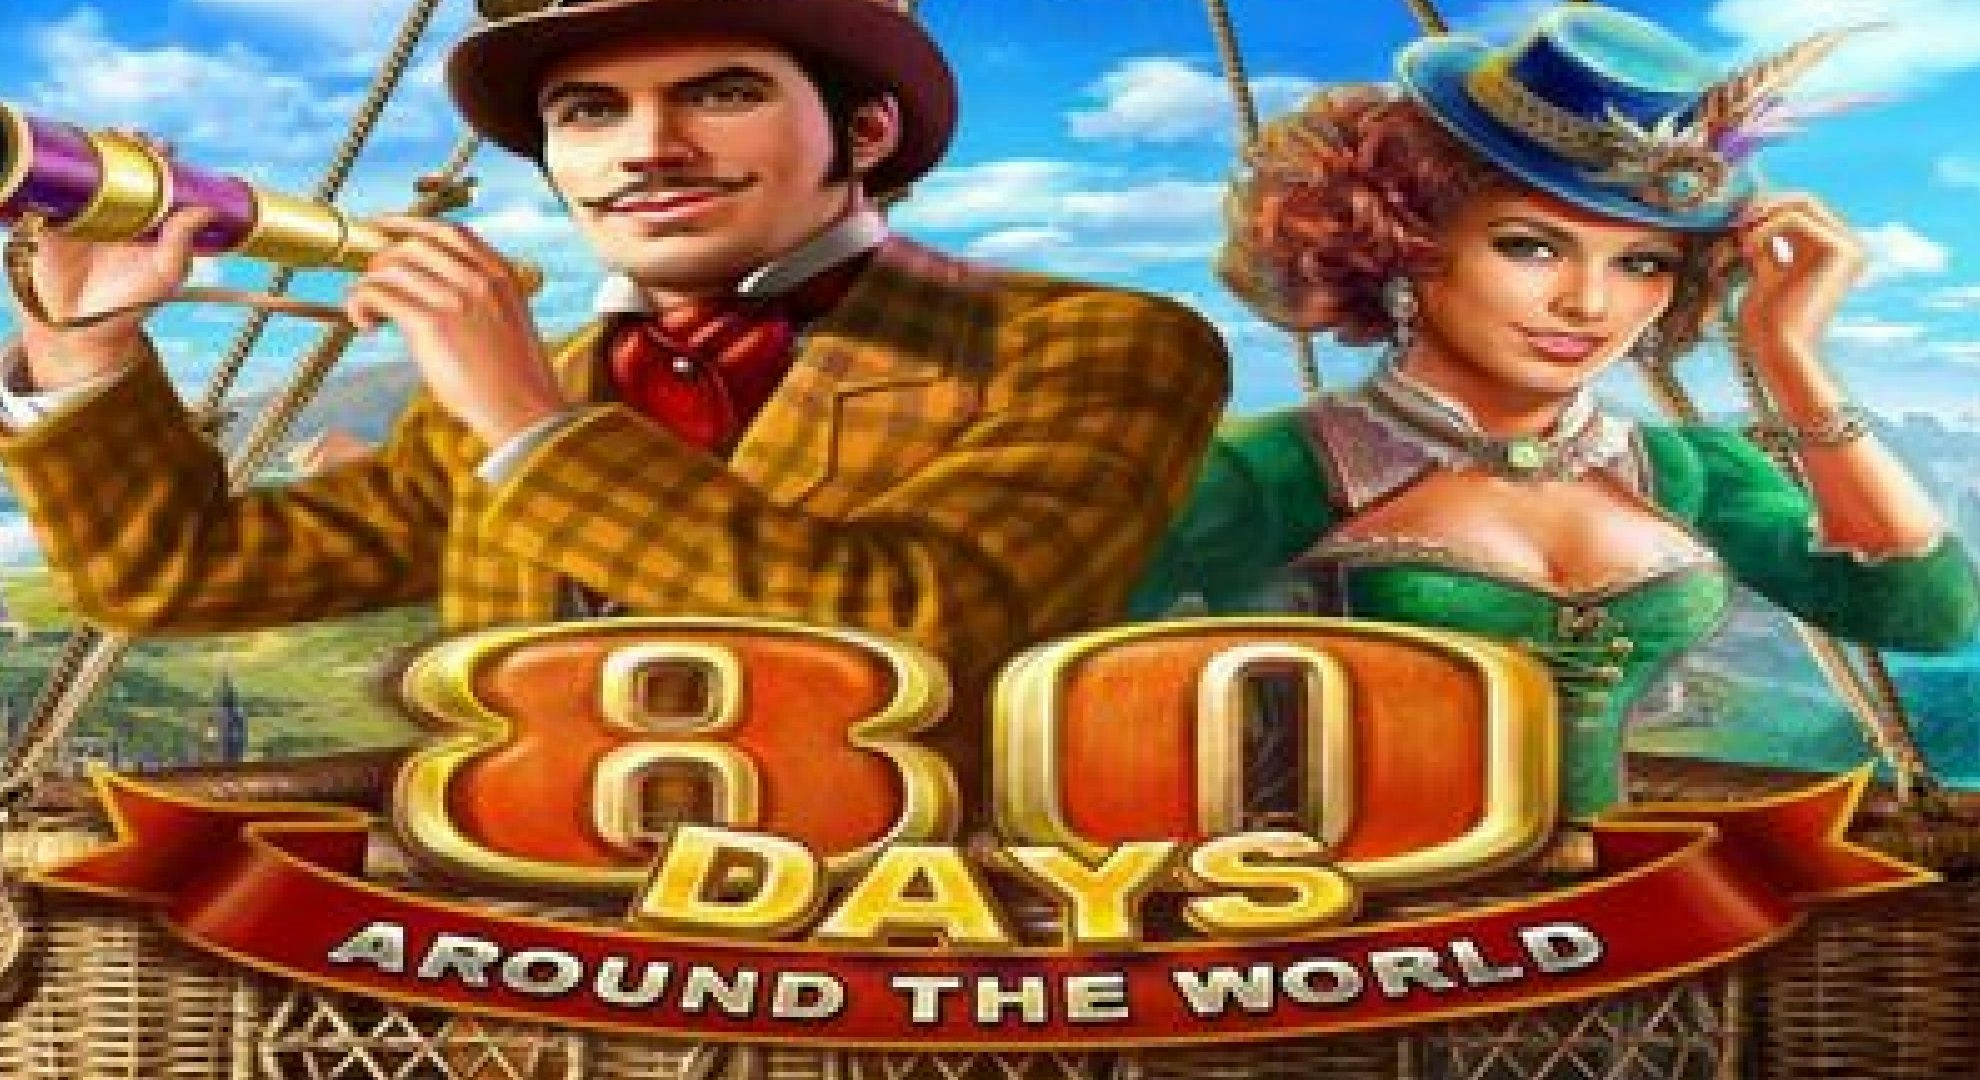 80 Days Around The World